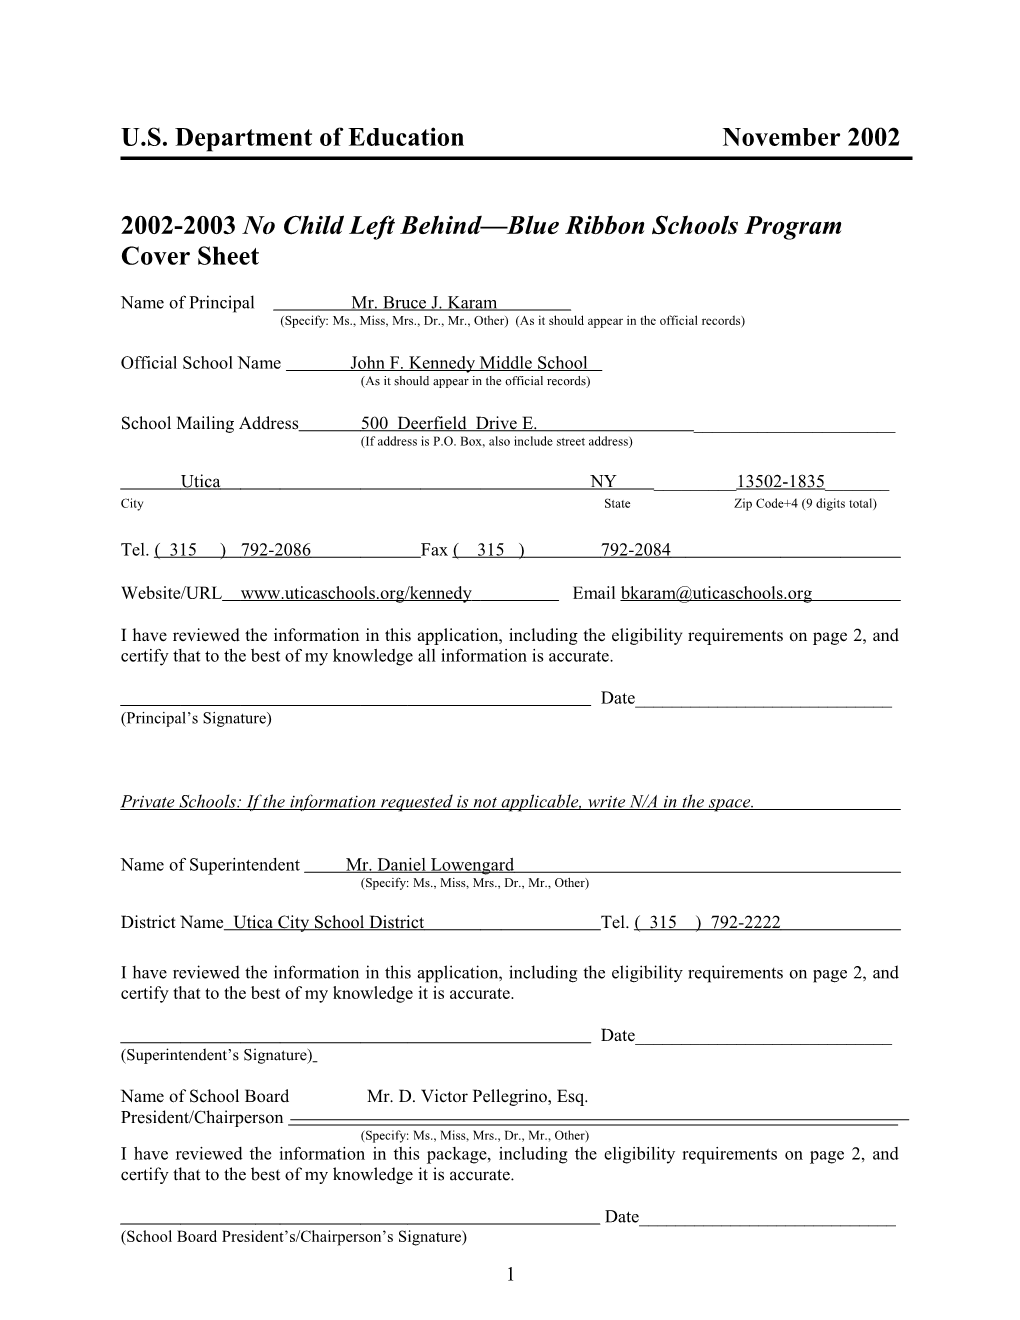 John F. Kennedy Middle School 2003 No Child Left Behind-Blue Ribbon School (Msword)